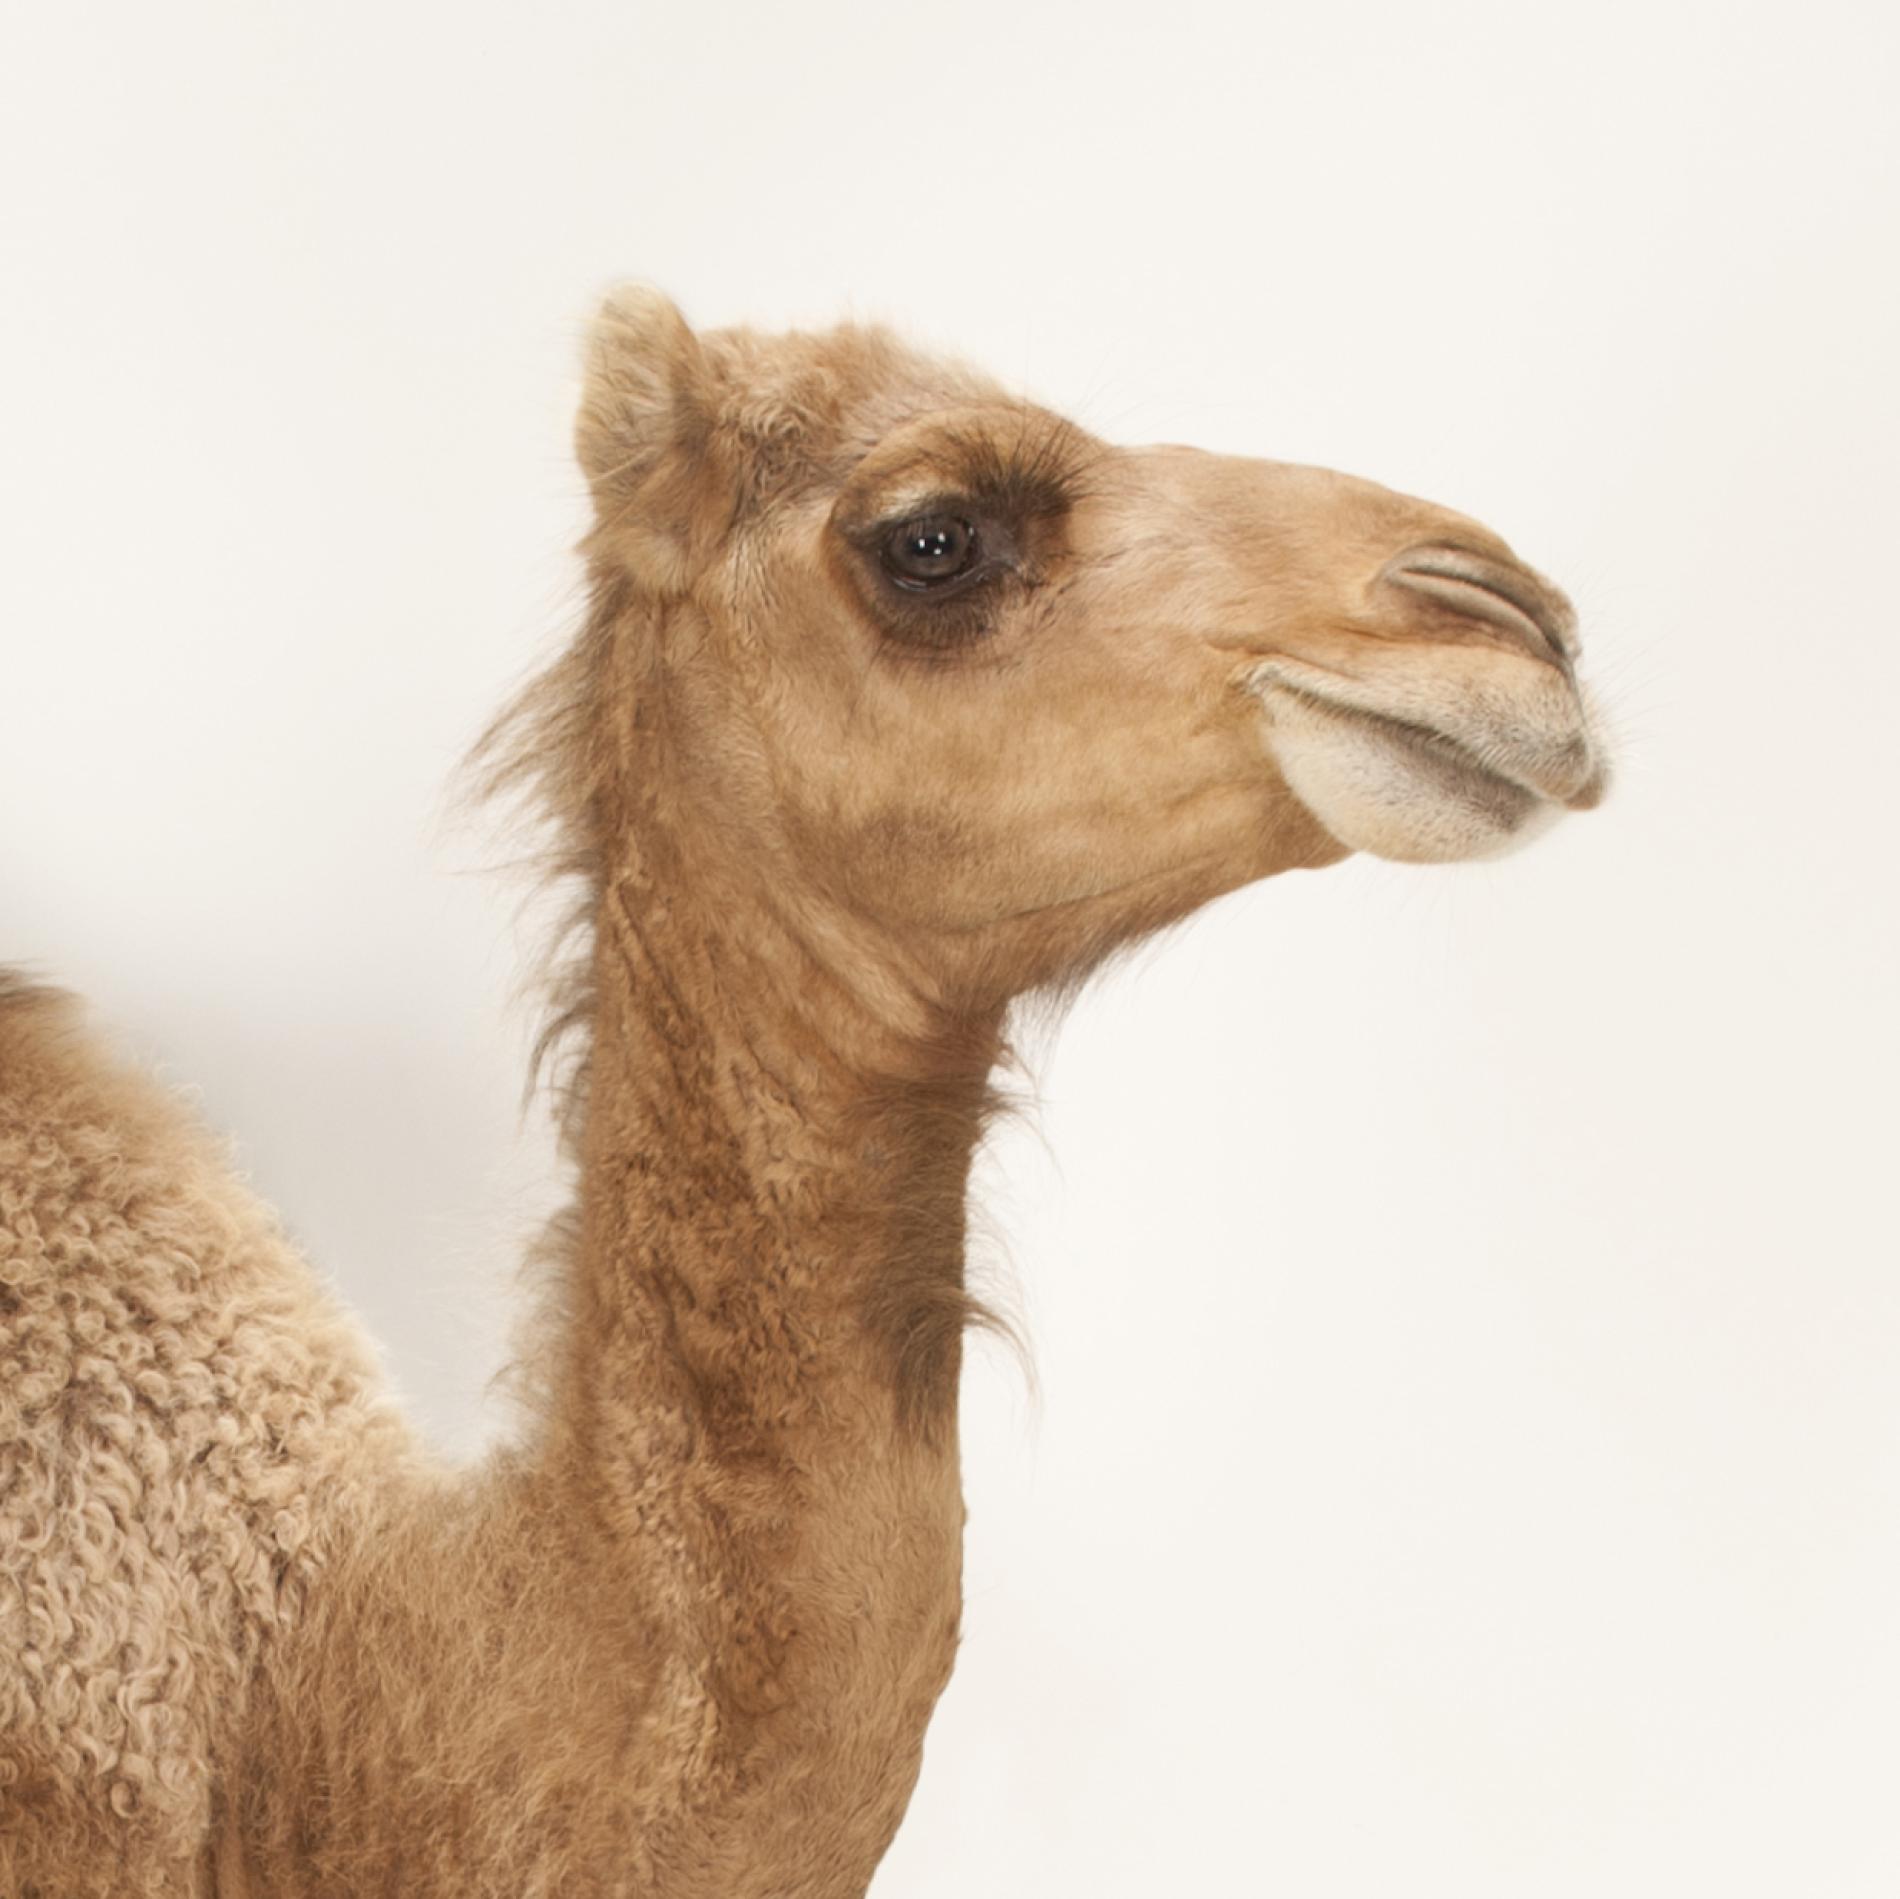 Arabian Camel (Dromedary) | National Geographic